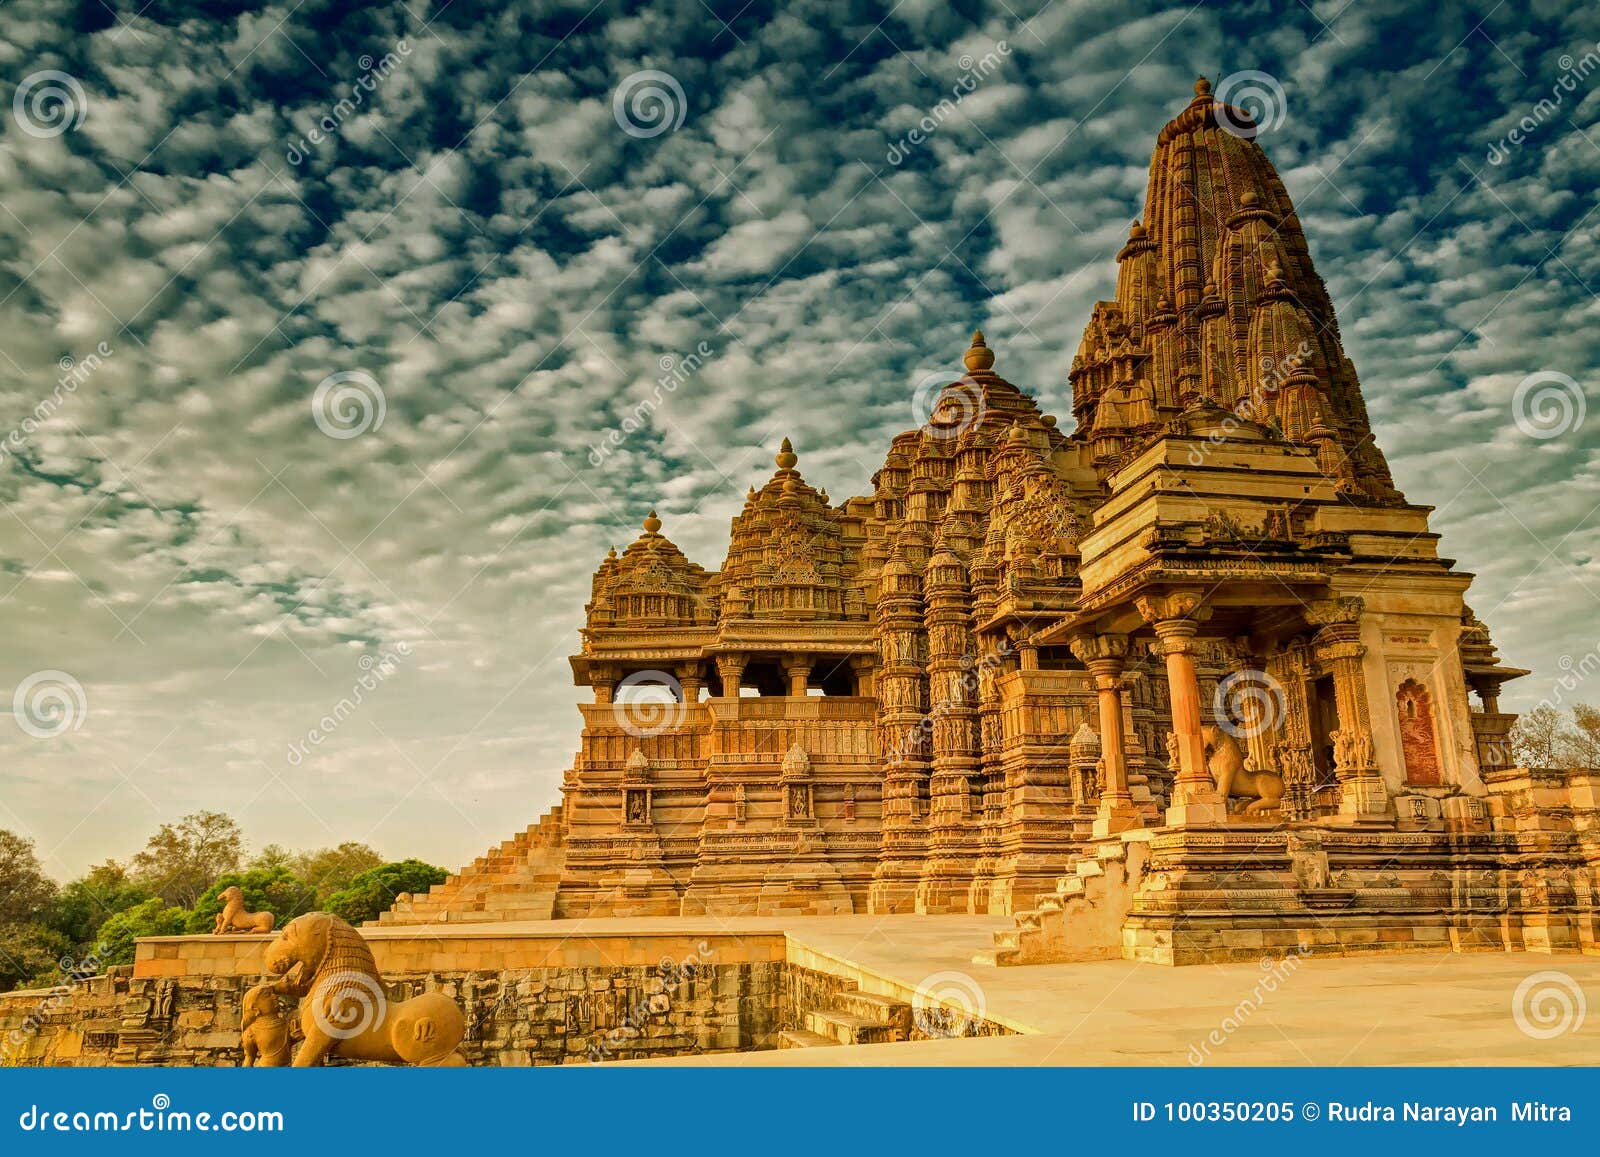 kandariya mahadeva temple, khajuraho, india-unesco world heritage site